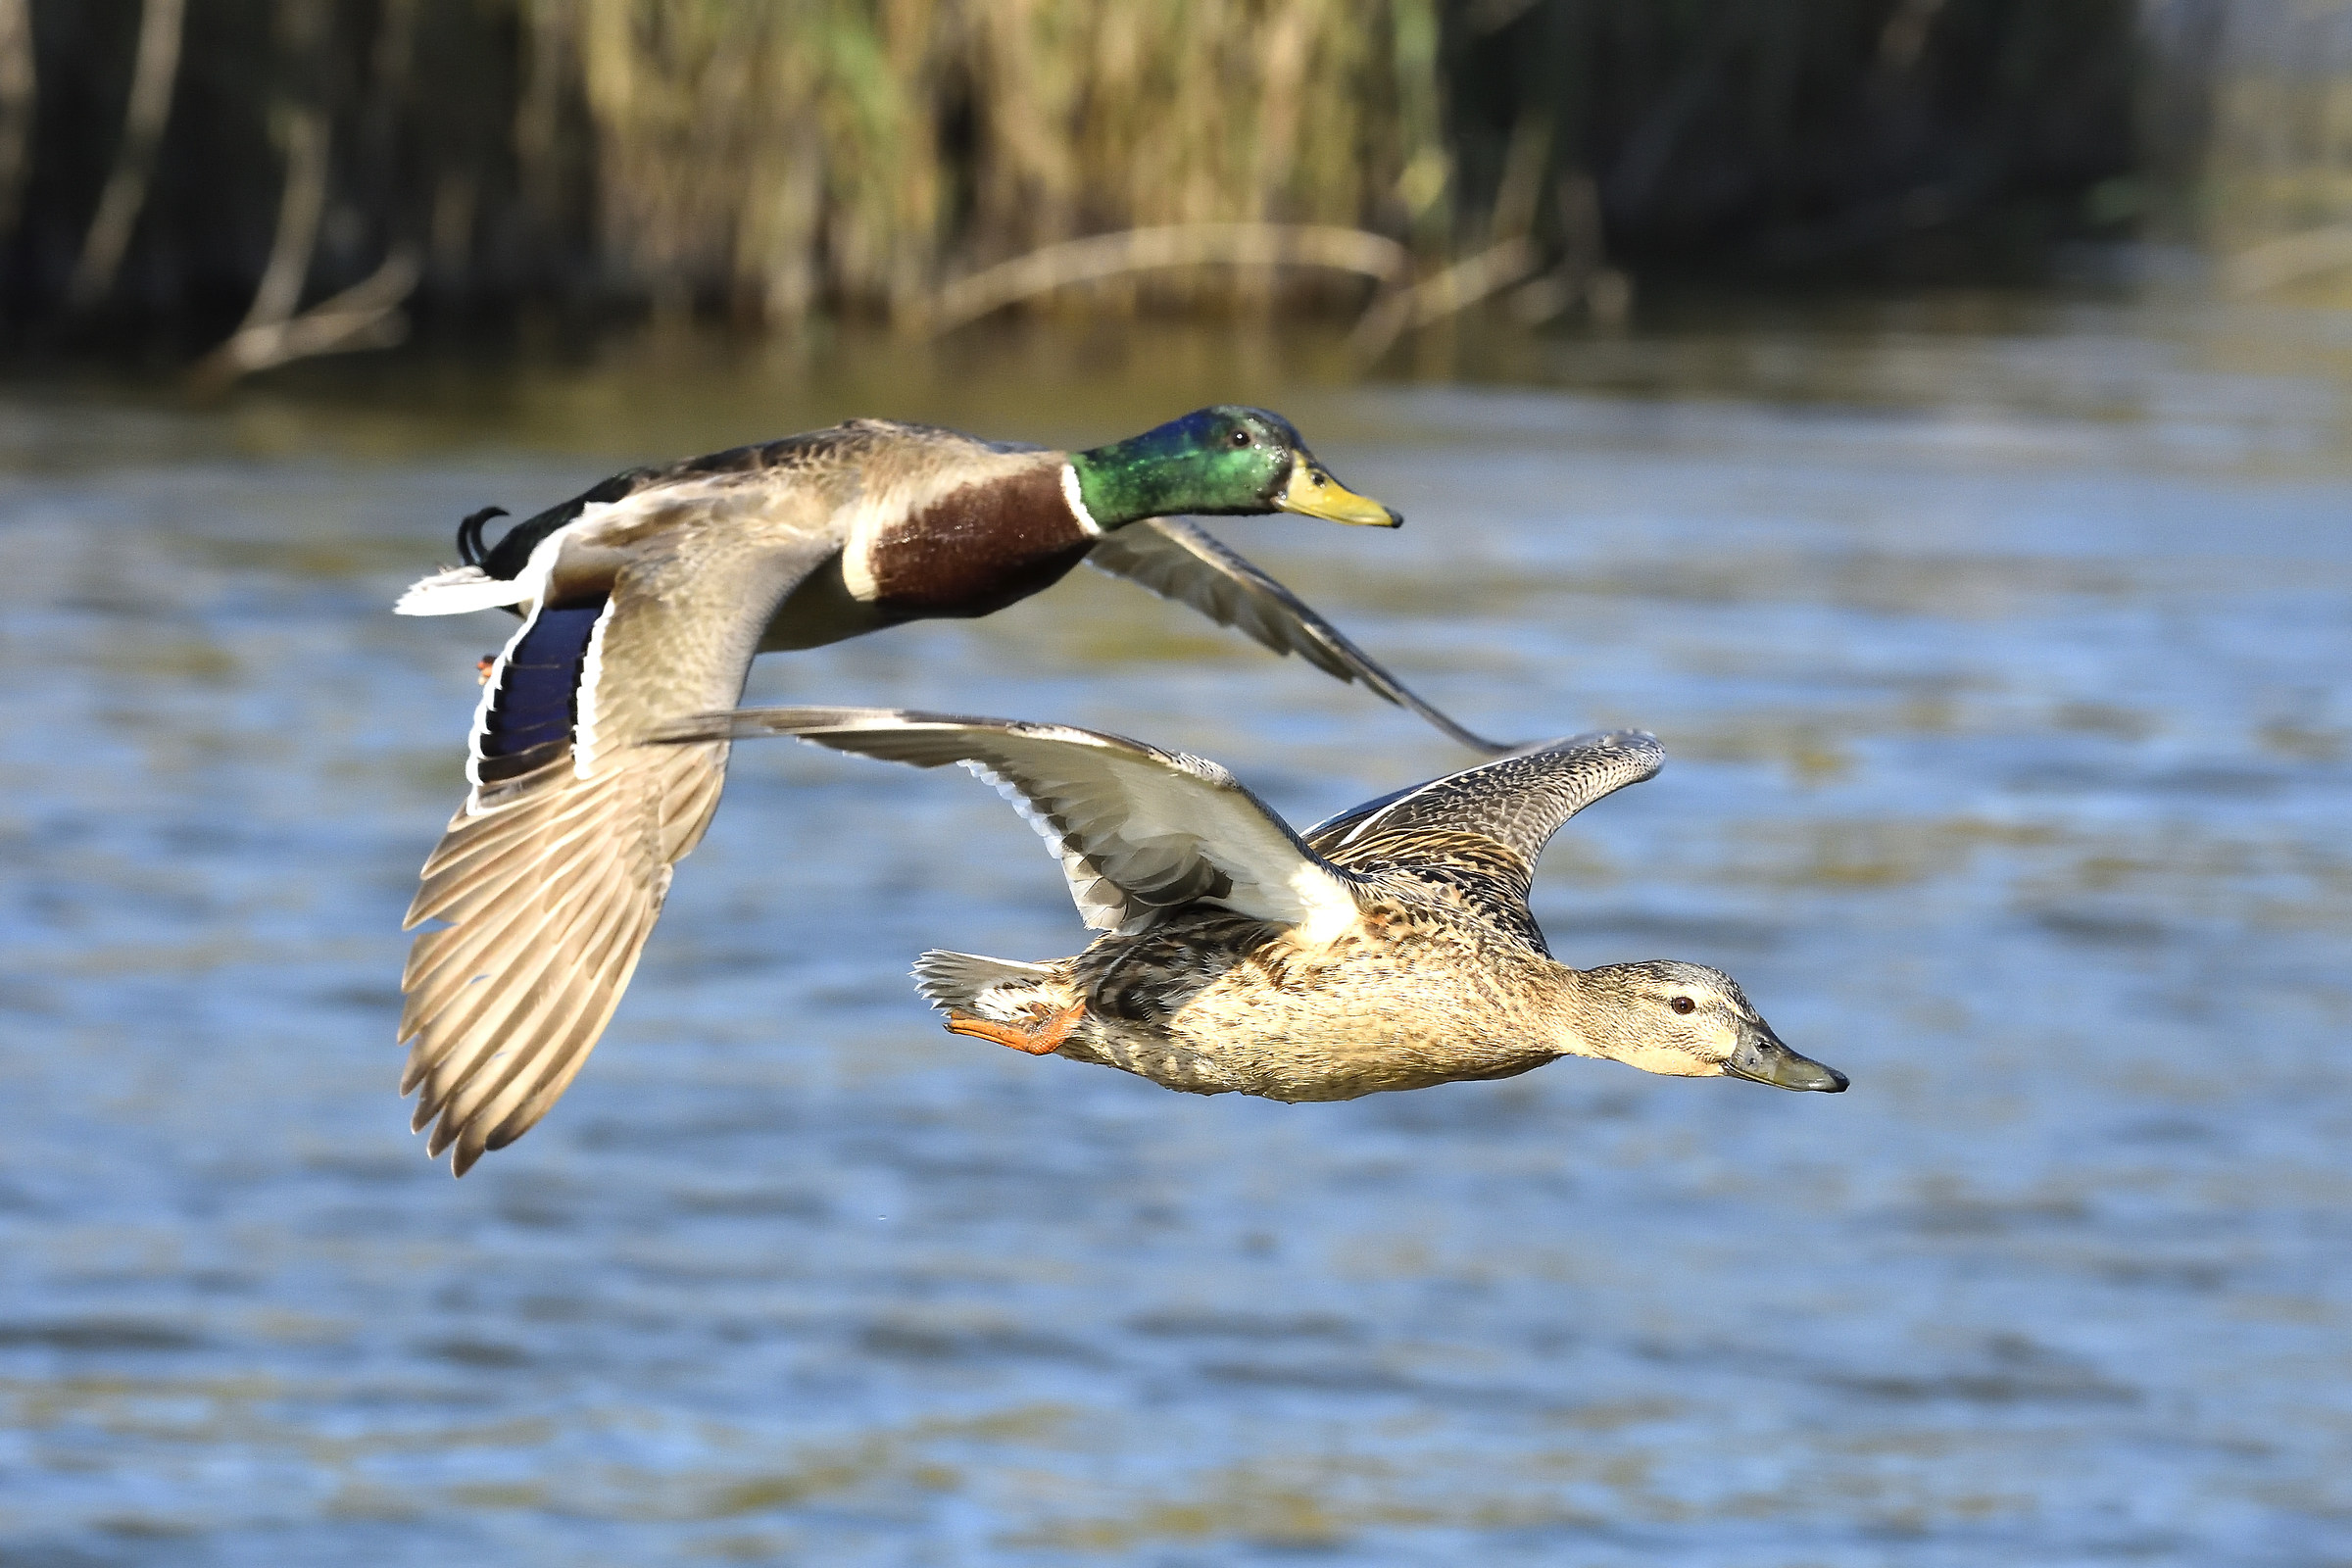 Ducks in flight...